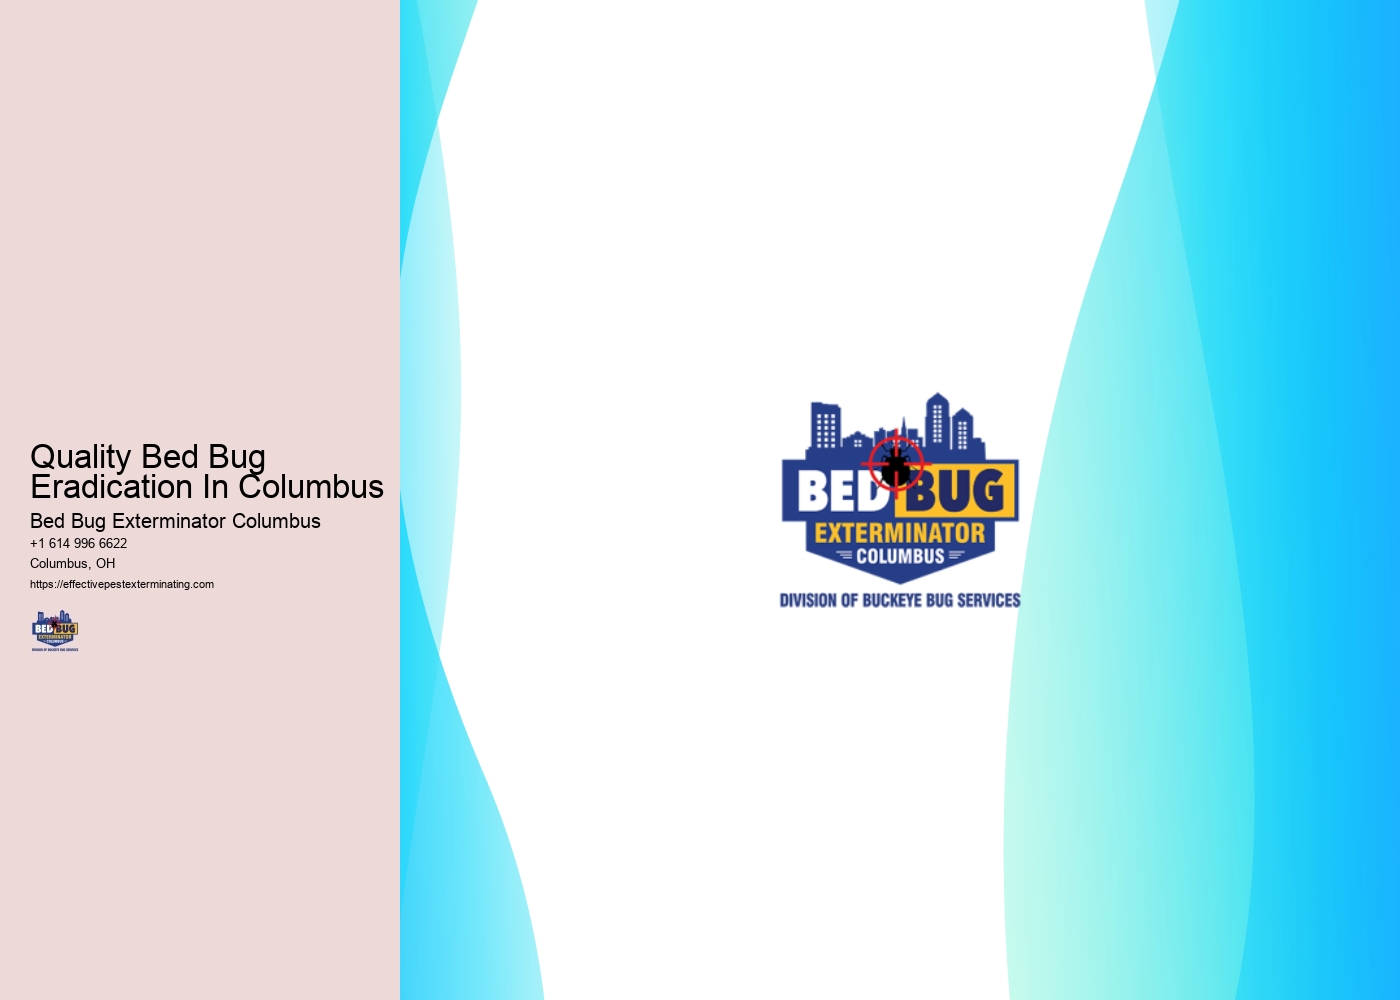 Quality Bed Bug Eradication In Columbus